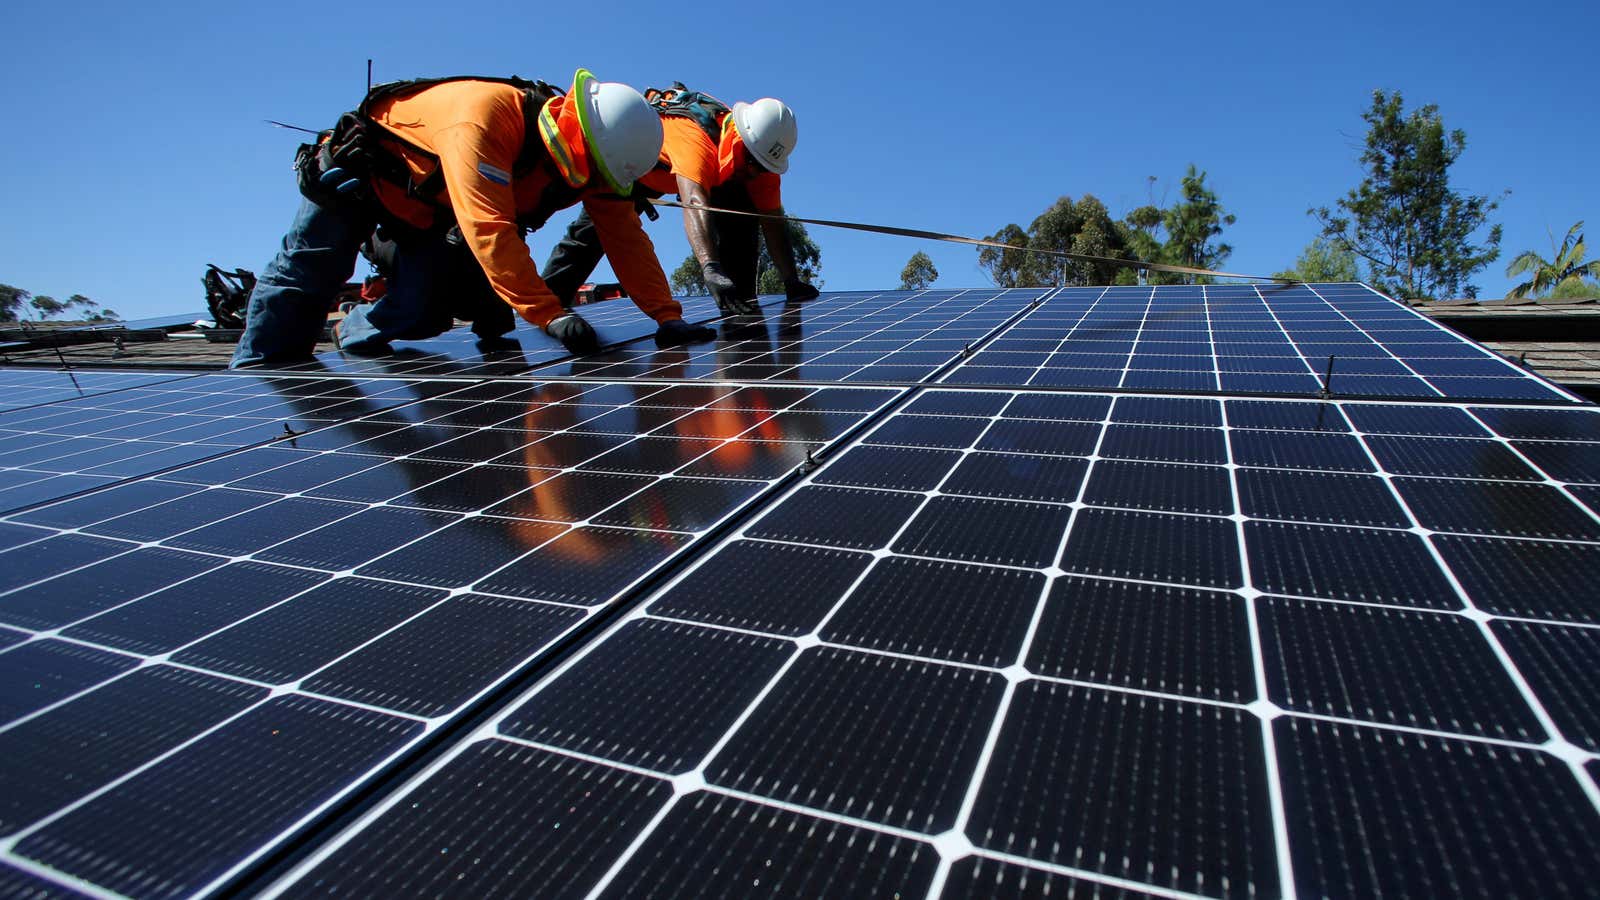 The Trump solar panel tariffs eliminated thousands of US jobs.